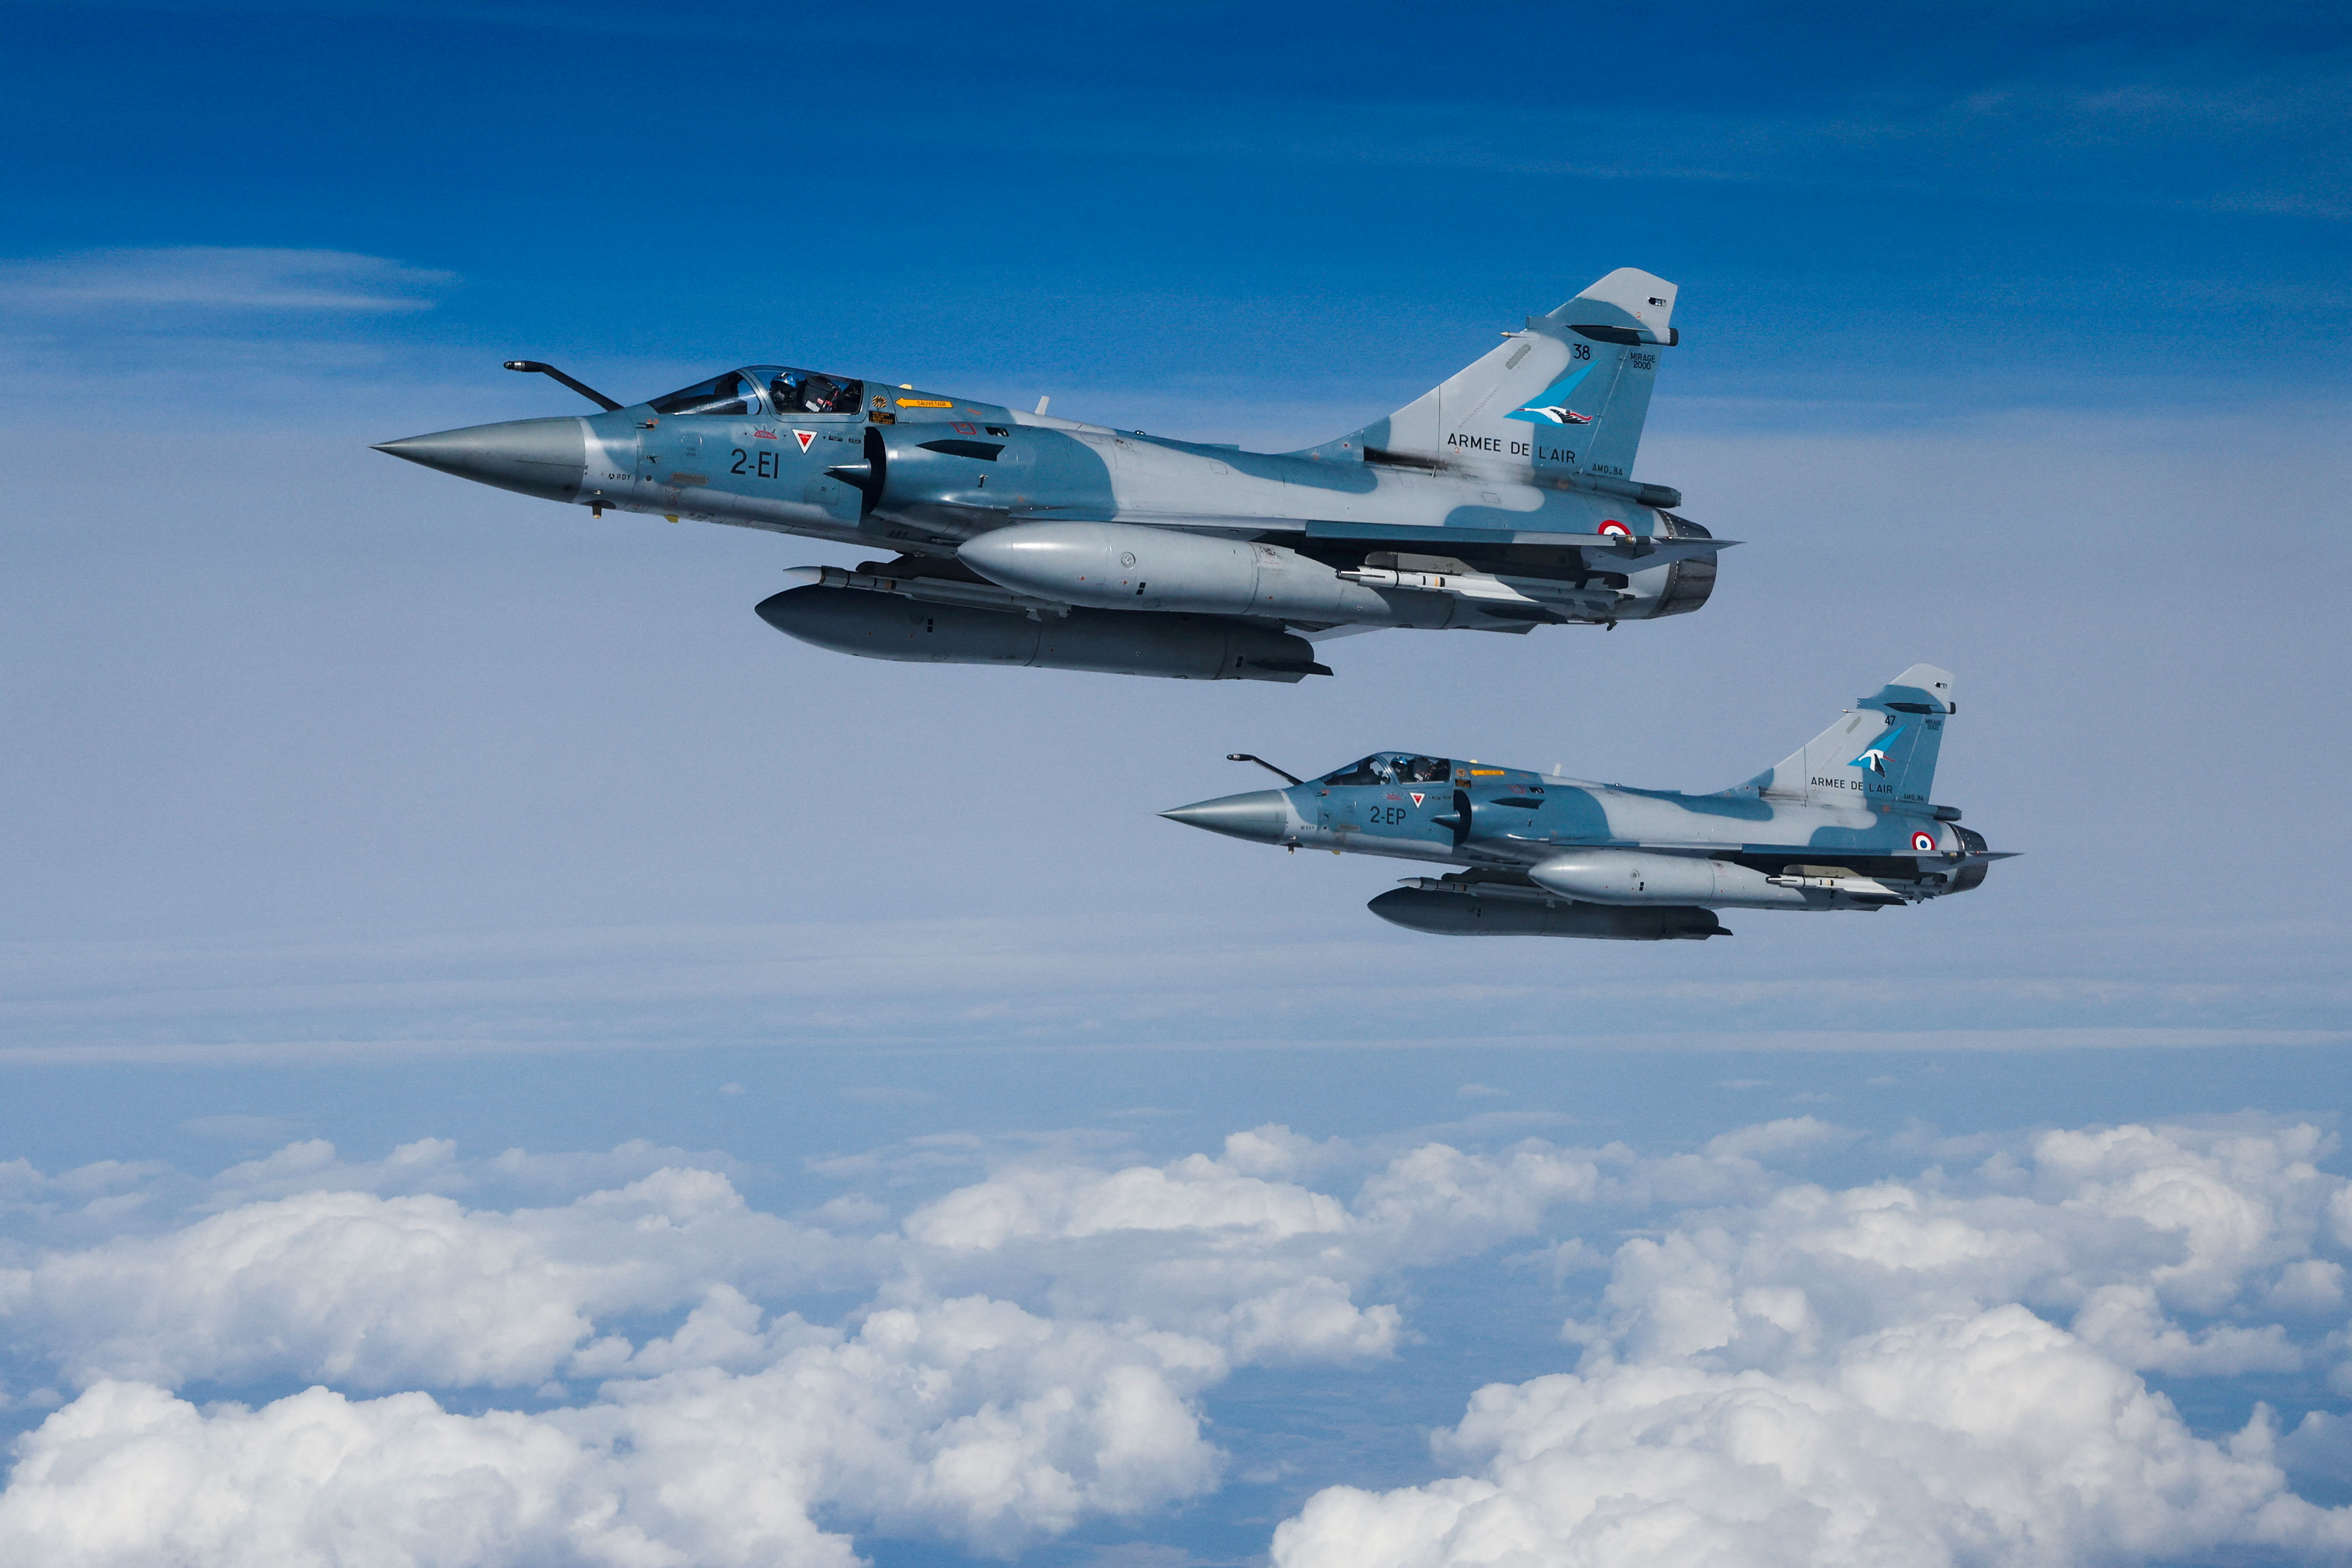 cover France to provide Mirage 2000 warplanes to Ukraine, Macron says